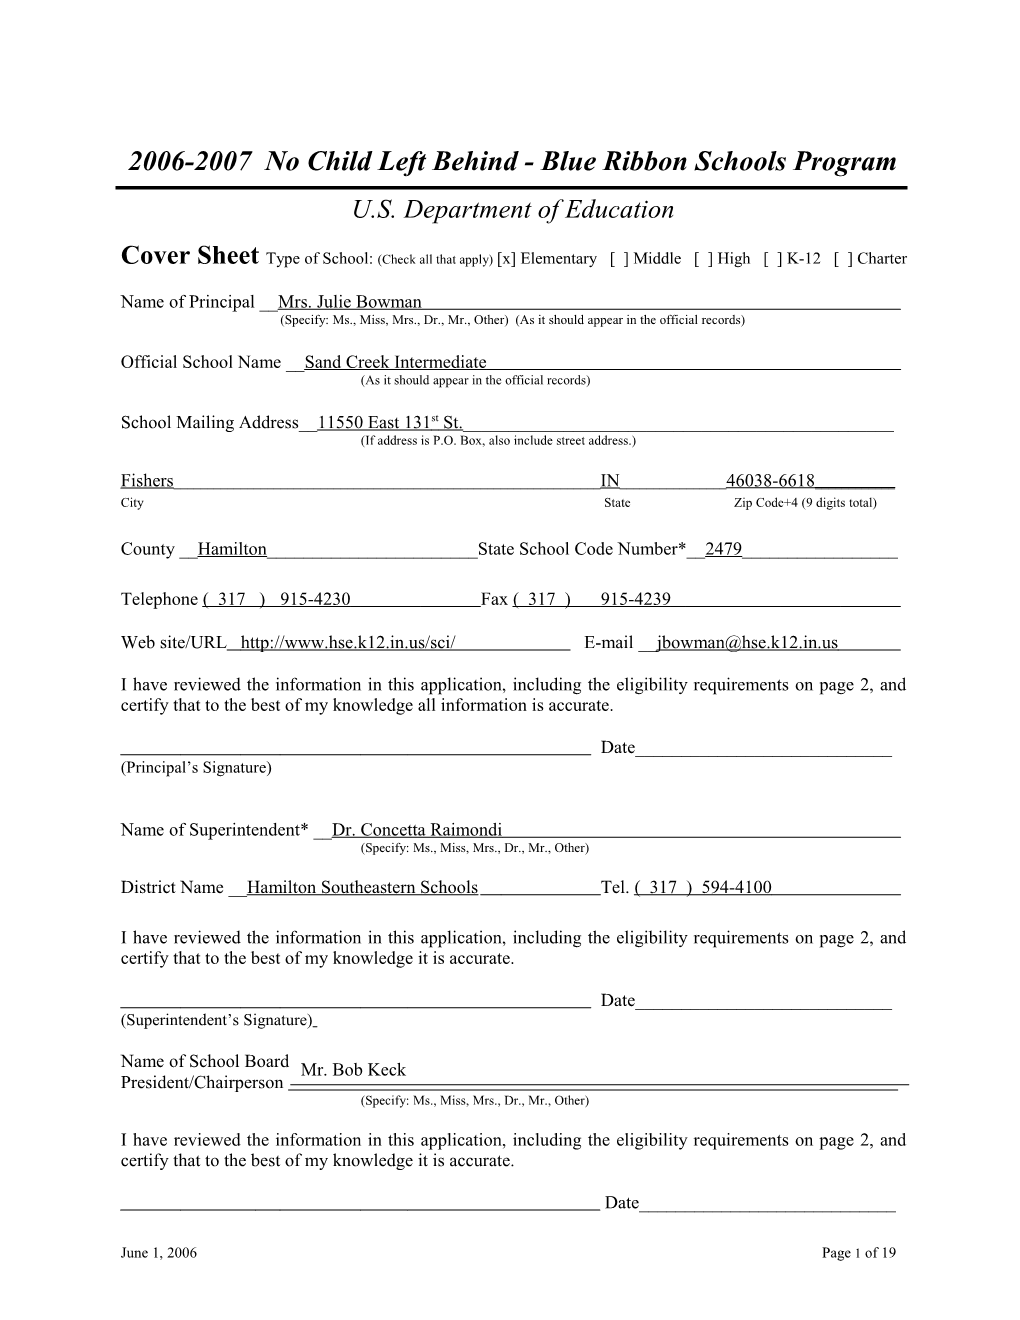 Application: 2006-2007, No Child Left Behind - Blue Ribbon Schools Program (MS Word) s17